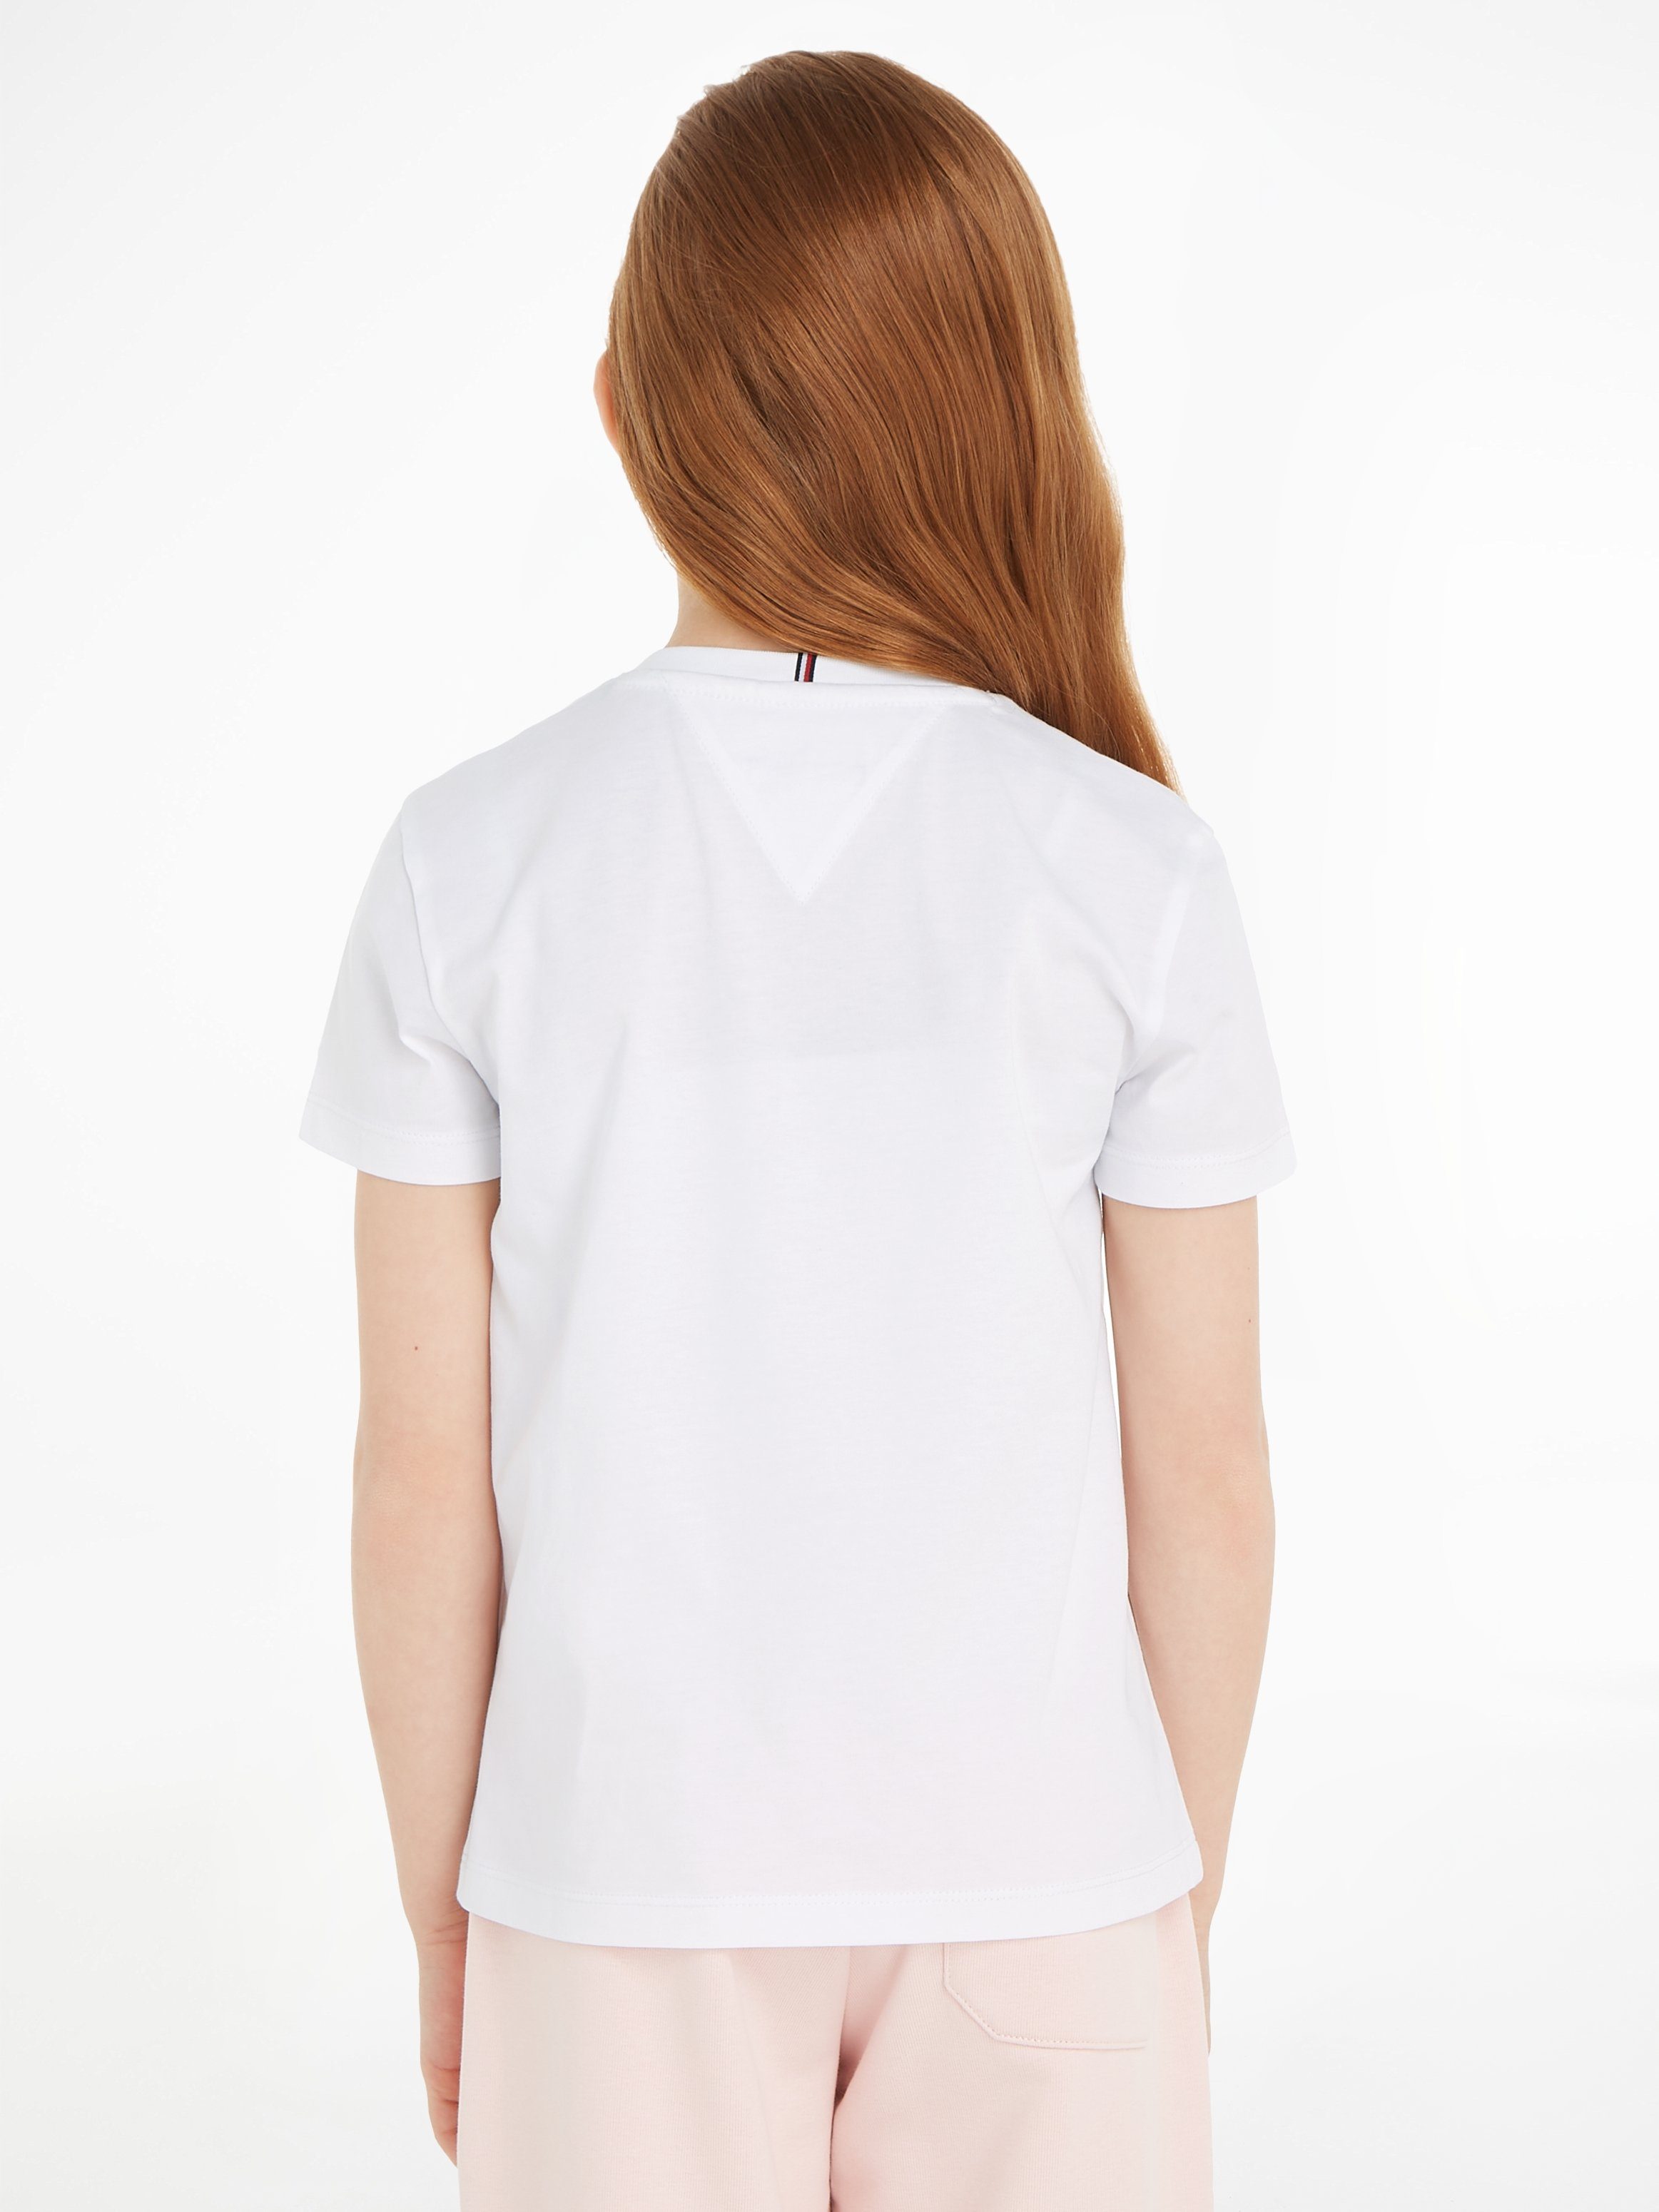 FOIL mit S/S PRINT MONOTYPE Folienprint TEE white Tommy Hilfiger T-Shirt